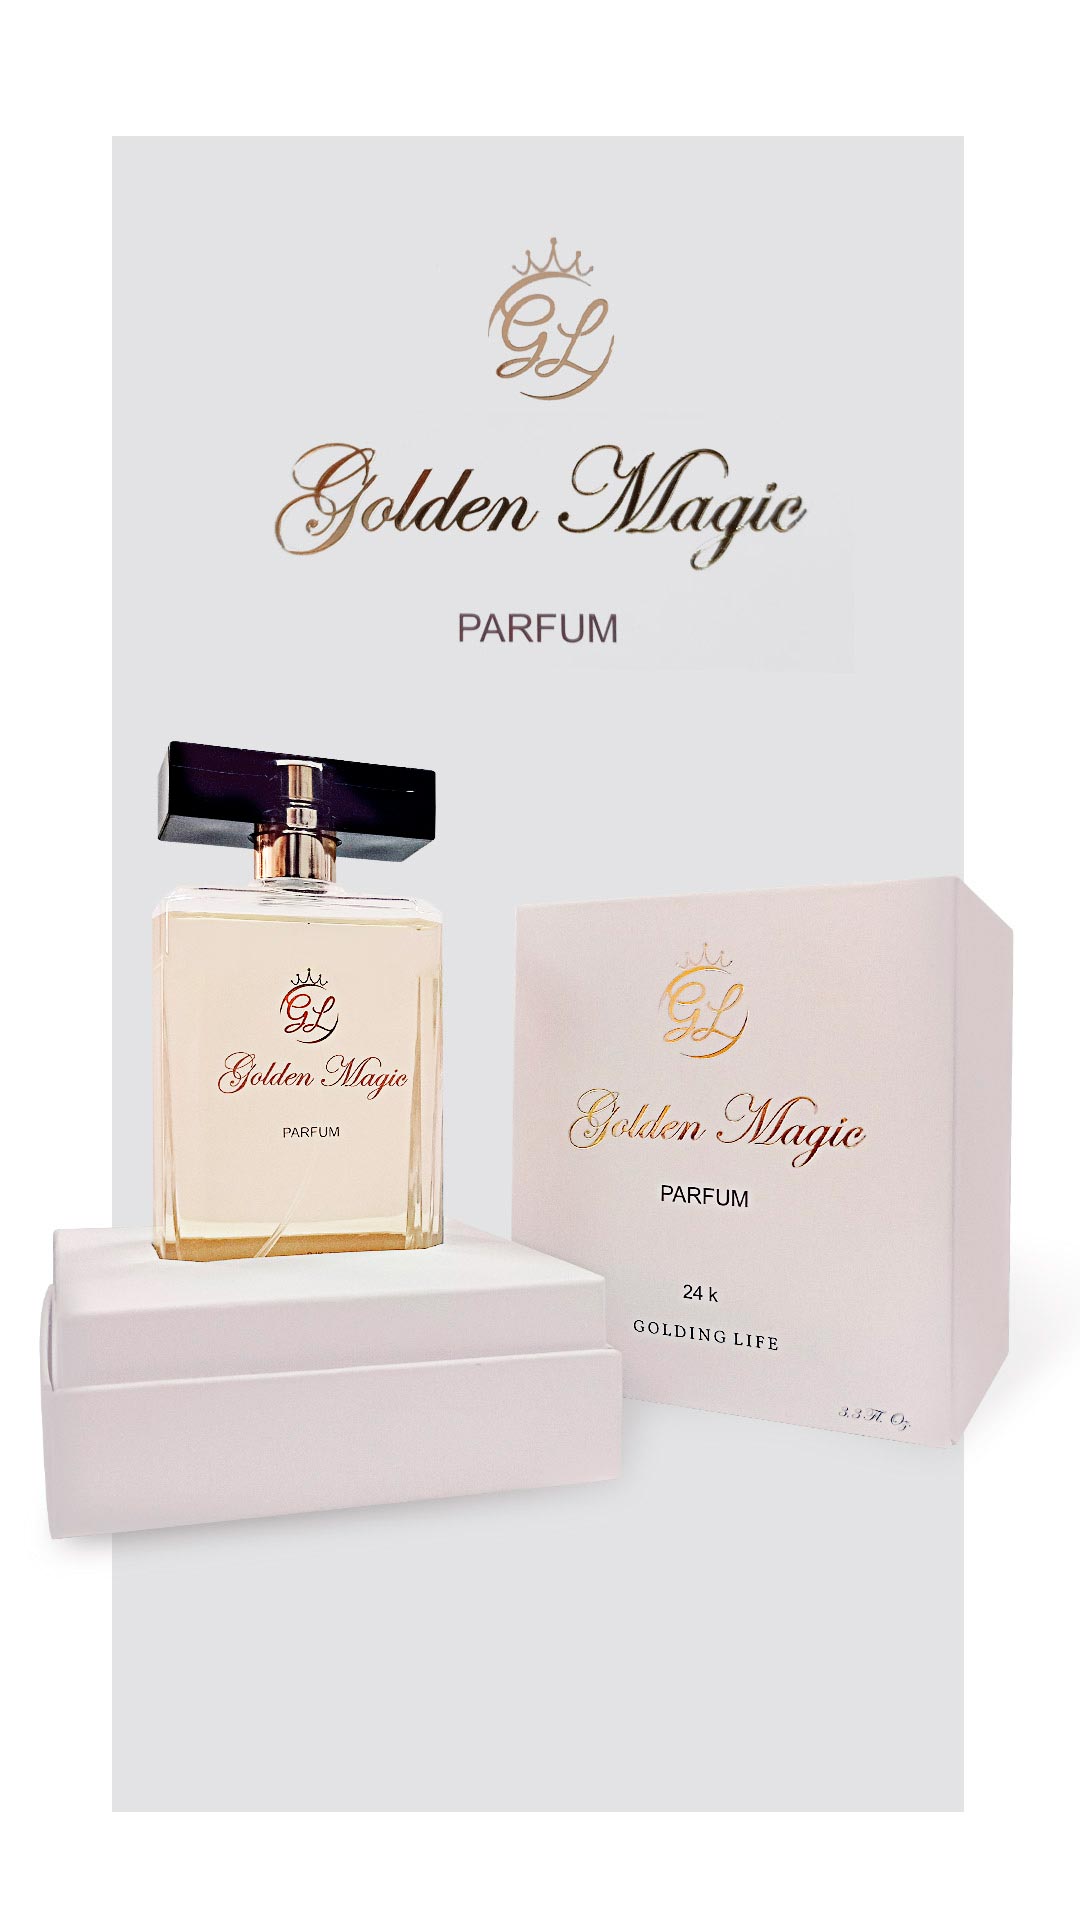 Proyecto Golden Magic Parfum - Esenssi Aromas: Fabrica de Perfumes de Equivalencia